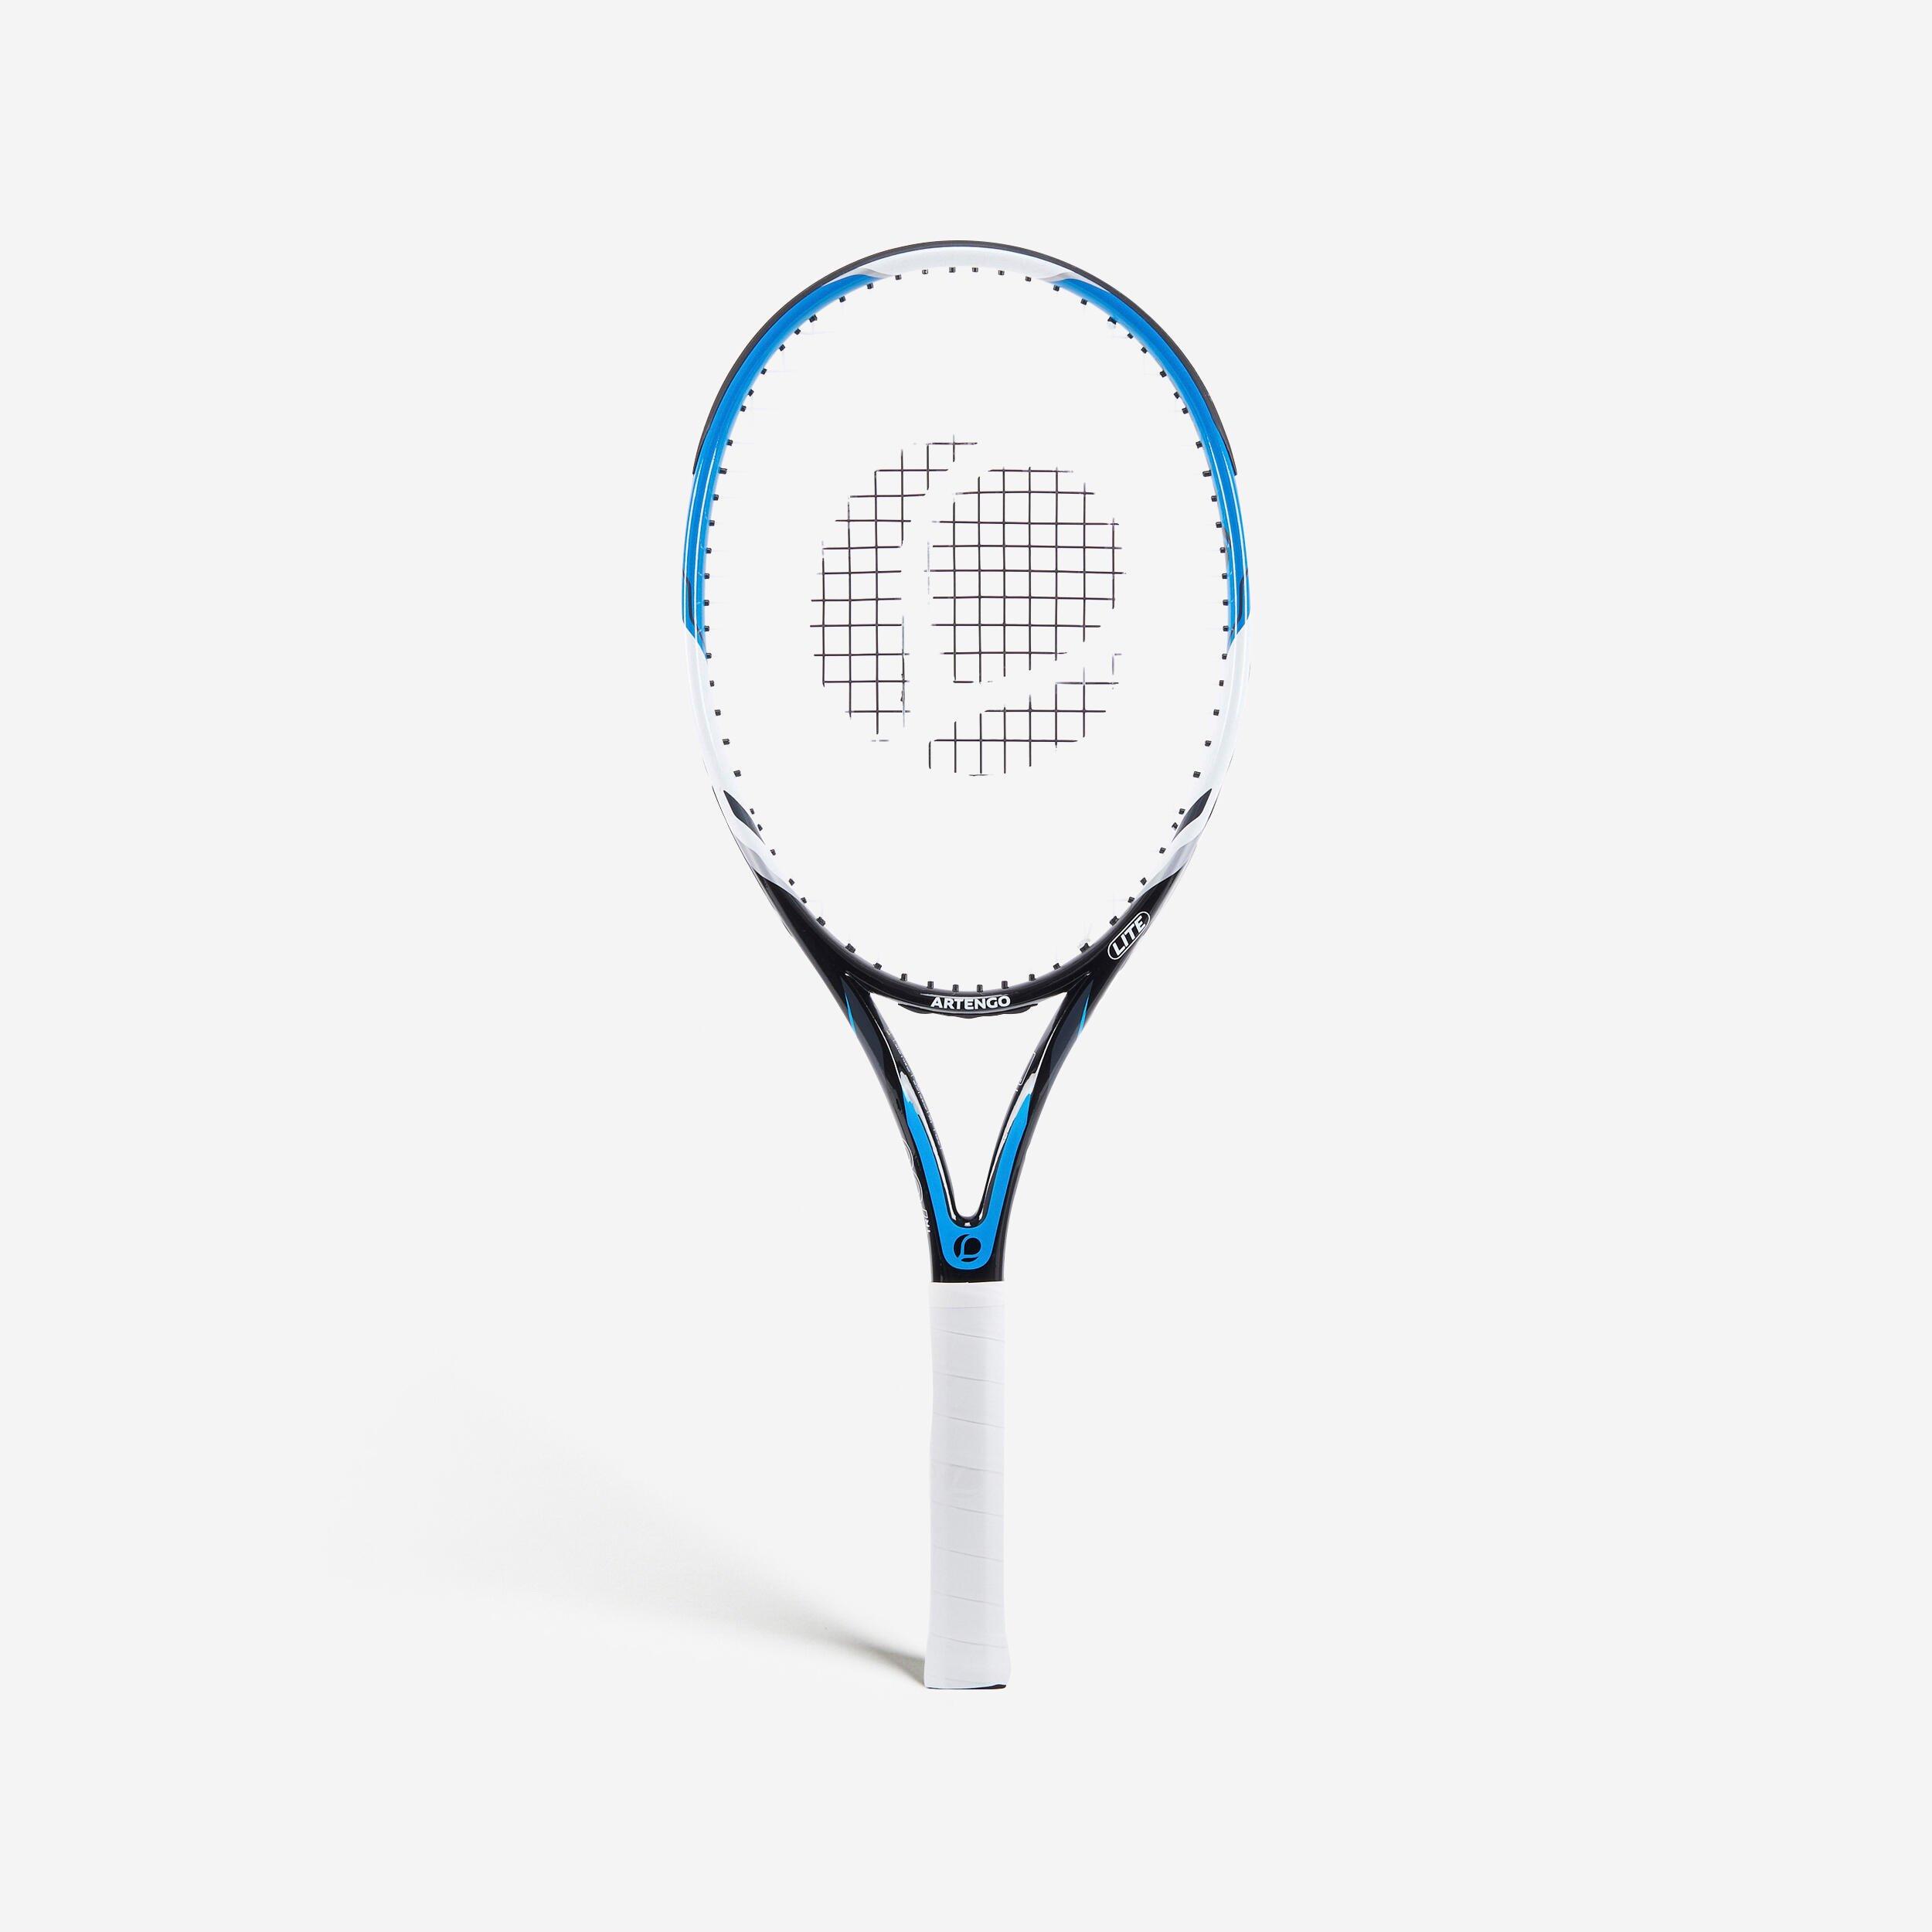 Decathlon Tr160 Lite Adult Tennis Racket